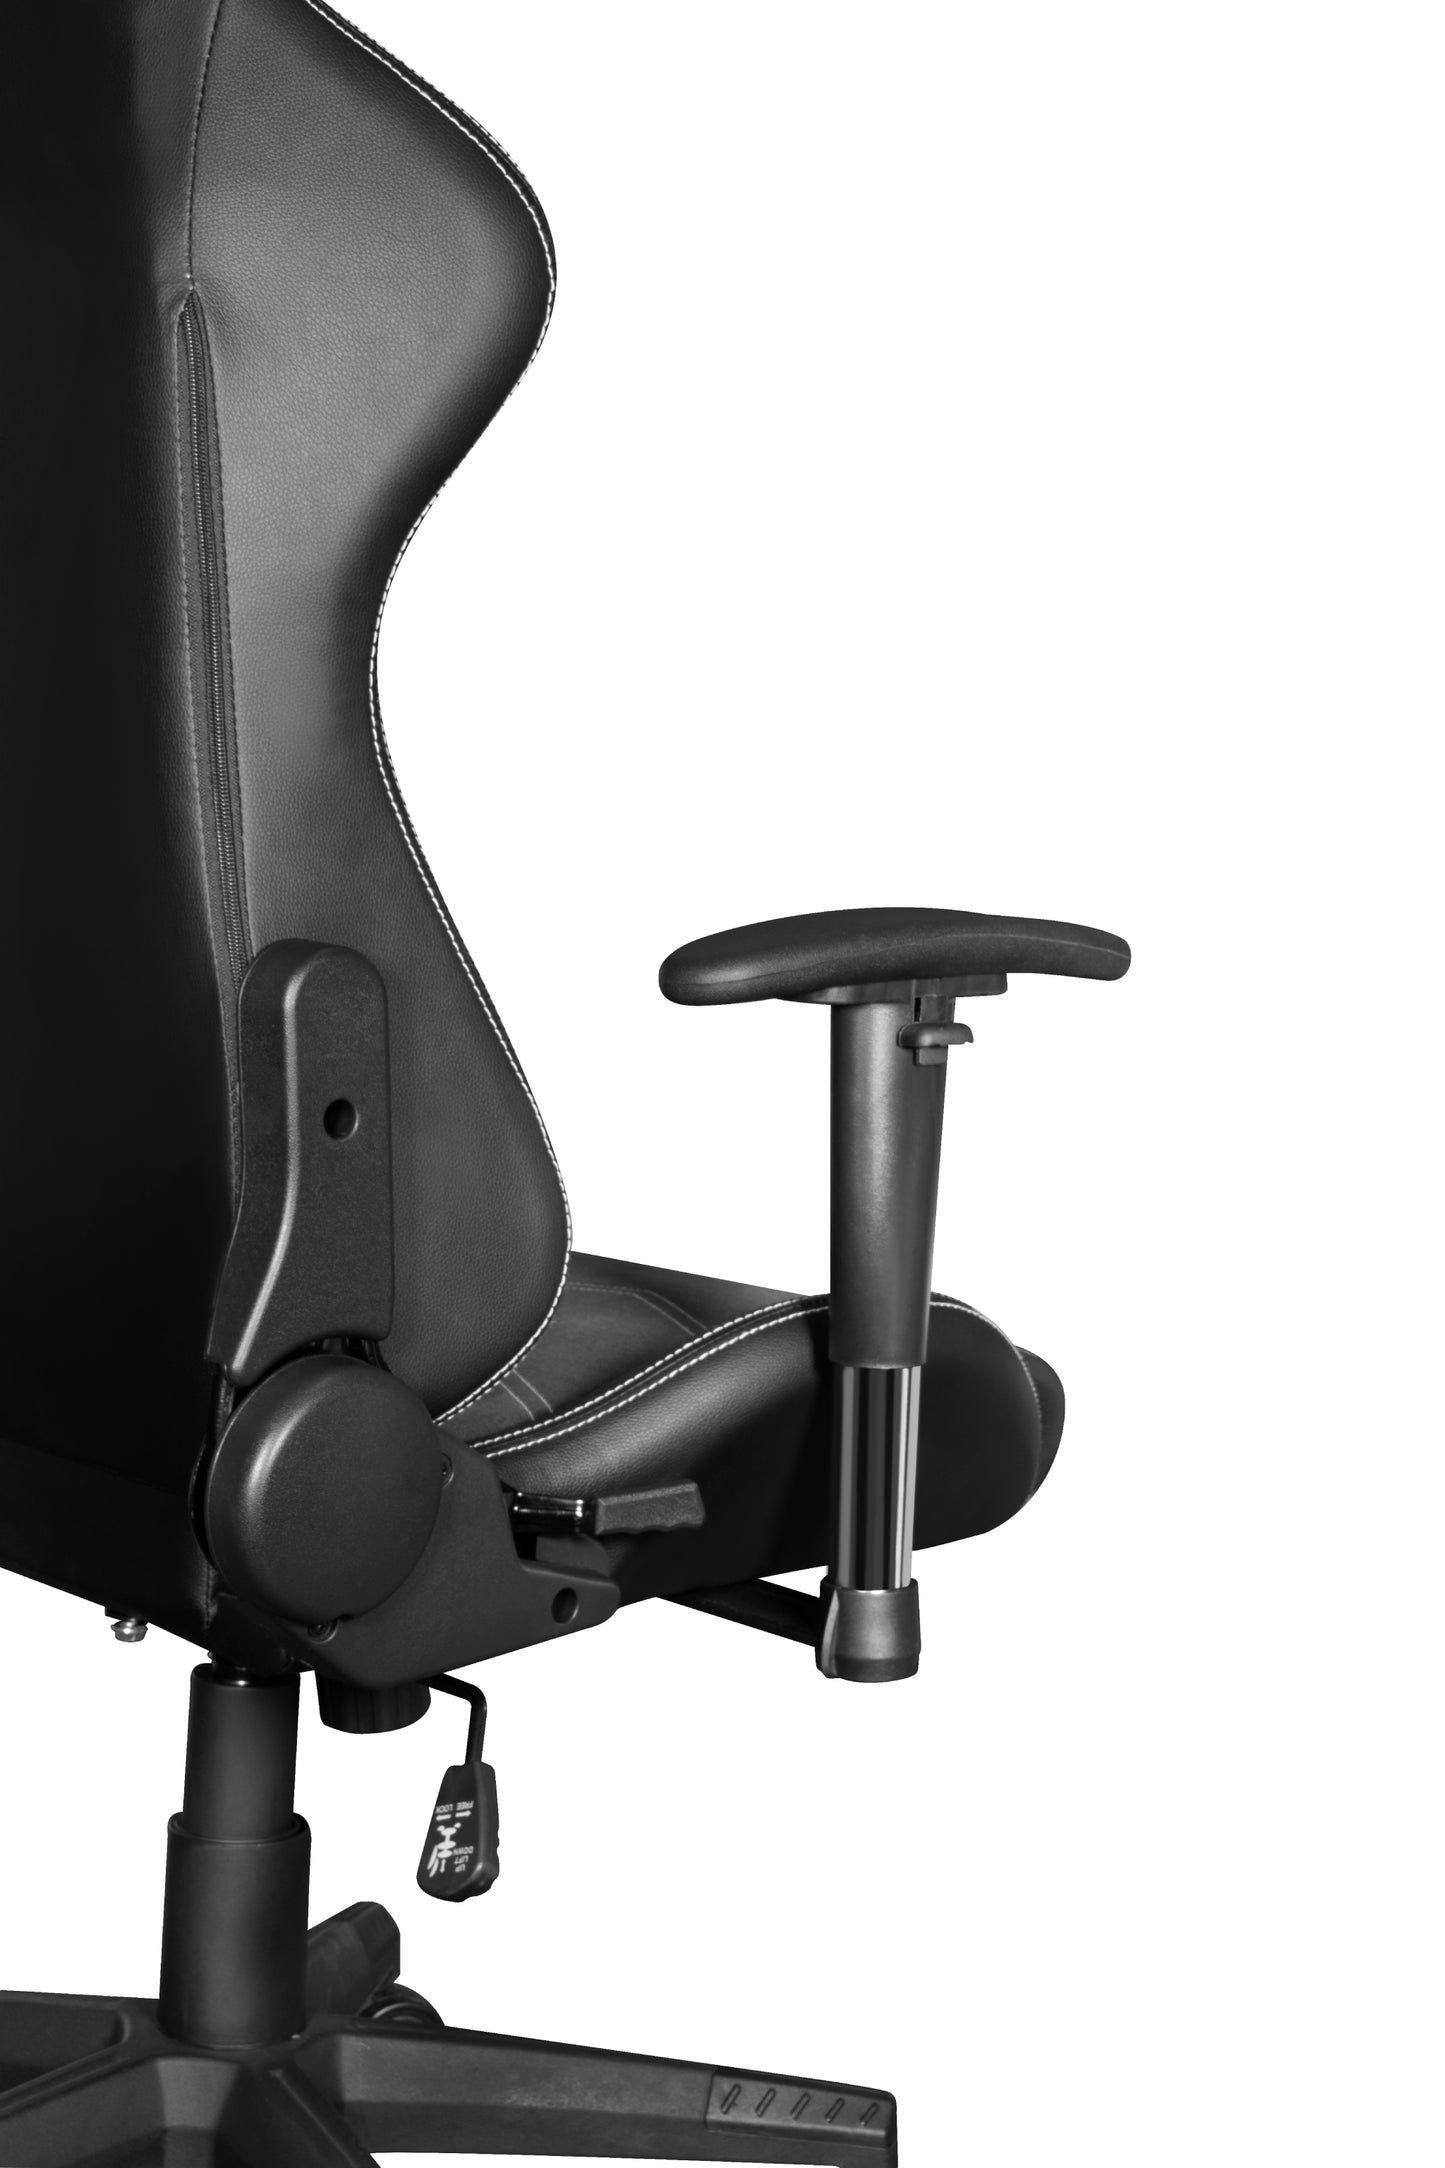 GALAX Gaming Chair (GC-04) Black-Gaming Chair-Galax-computerspace